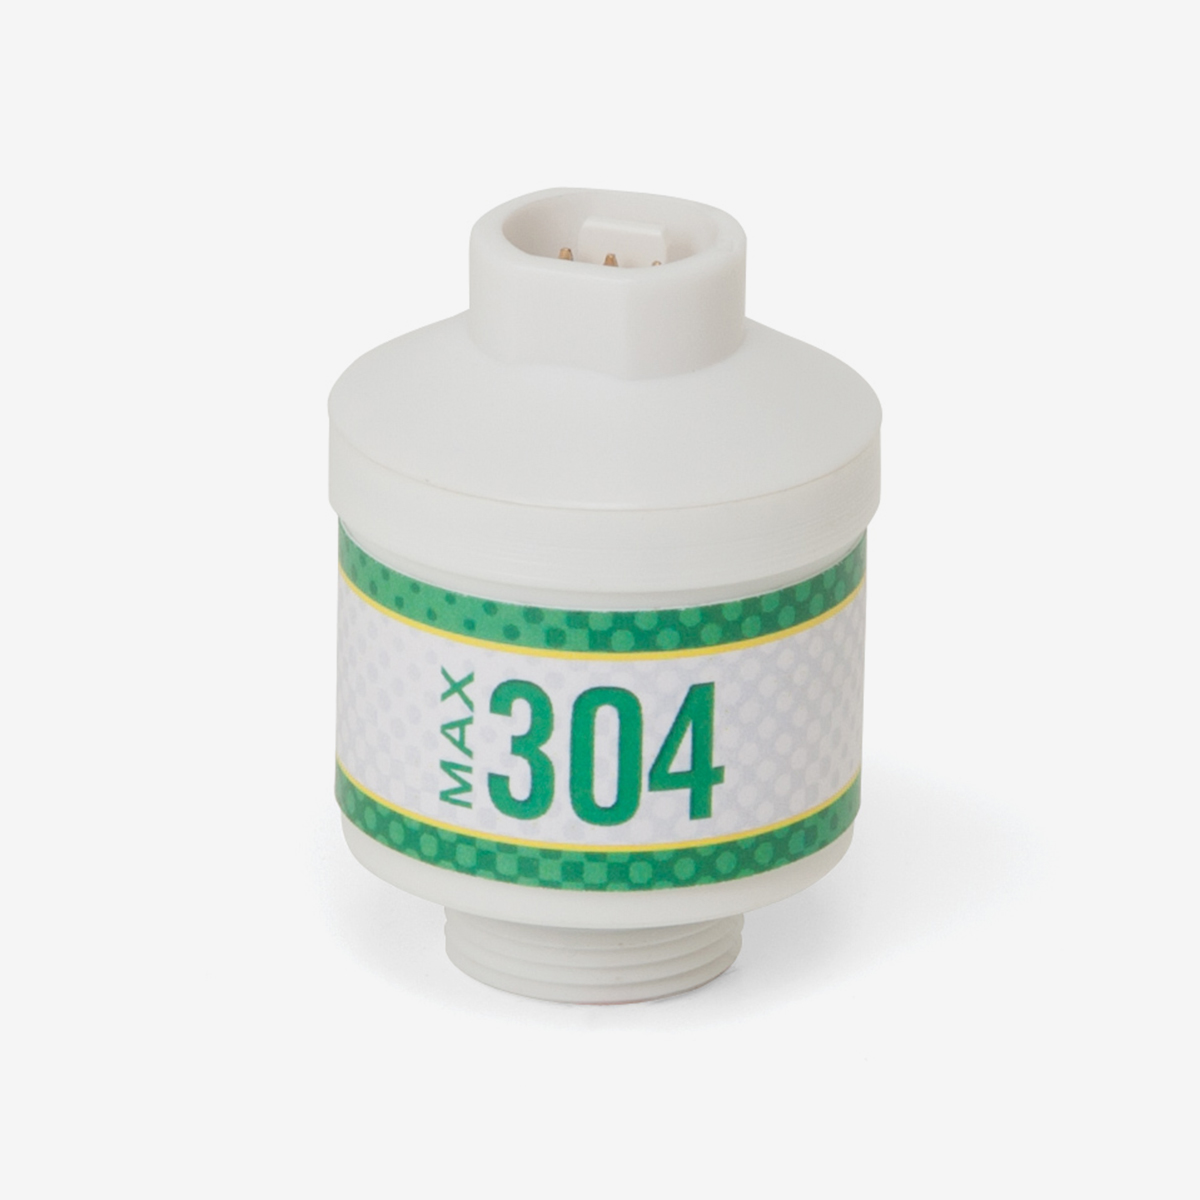 White and green max-304 scuba sensor on white background